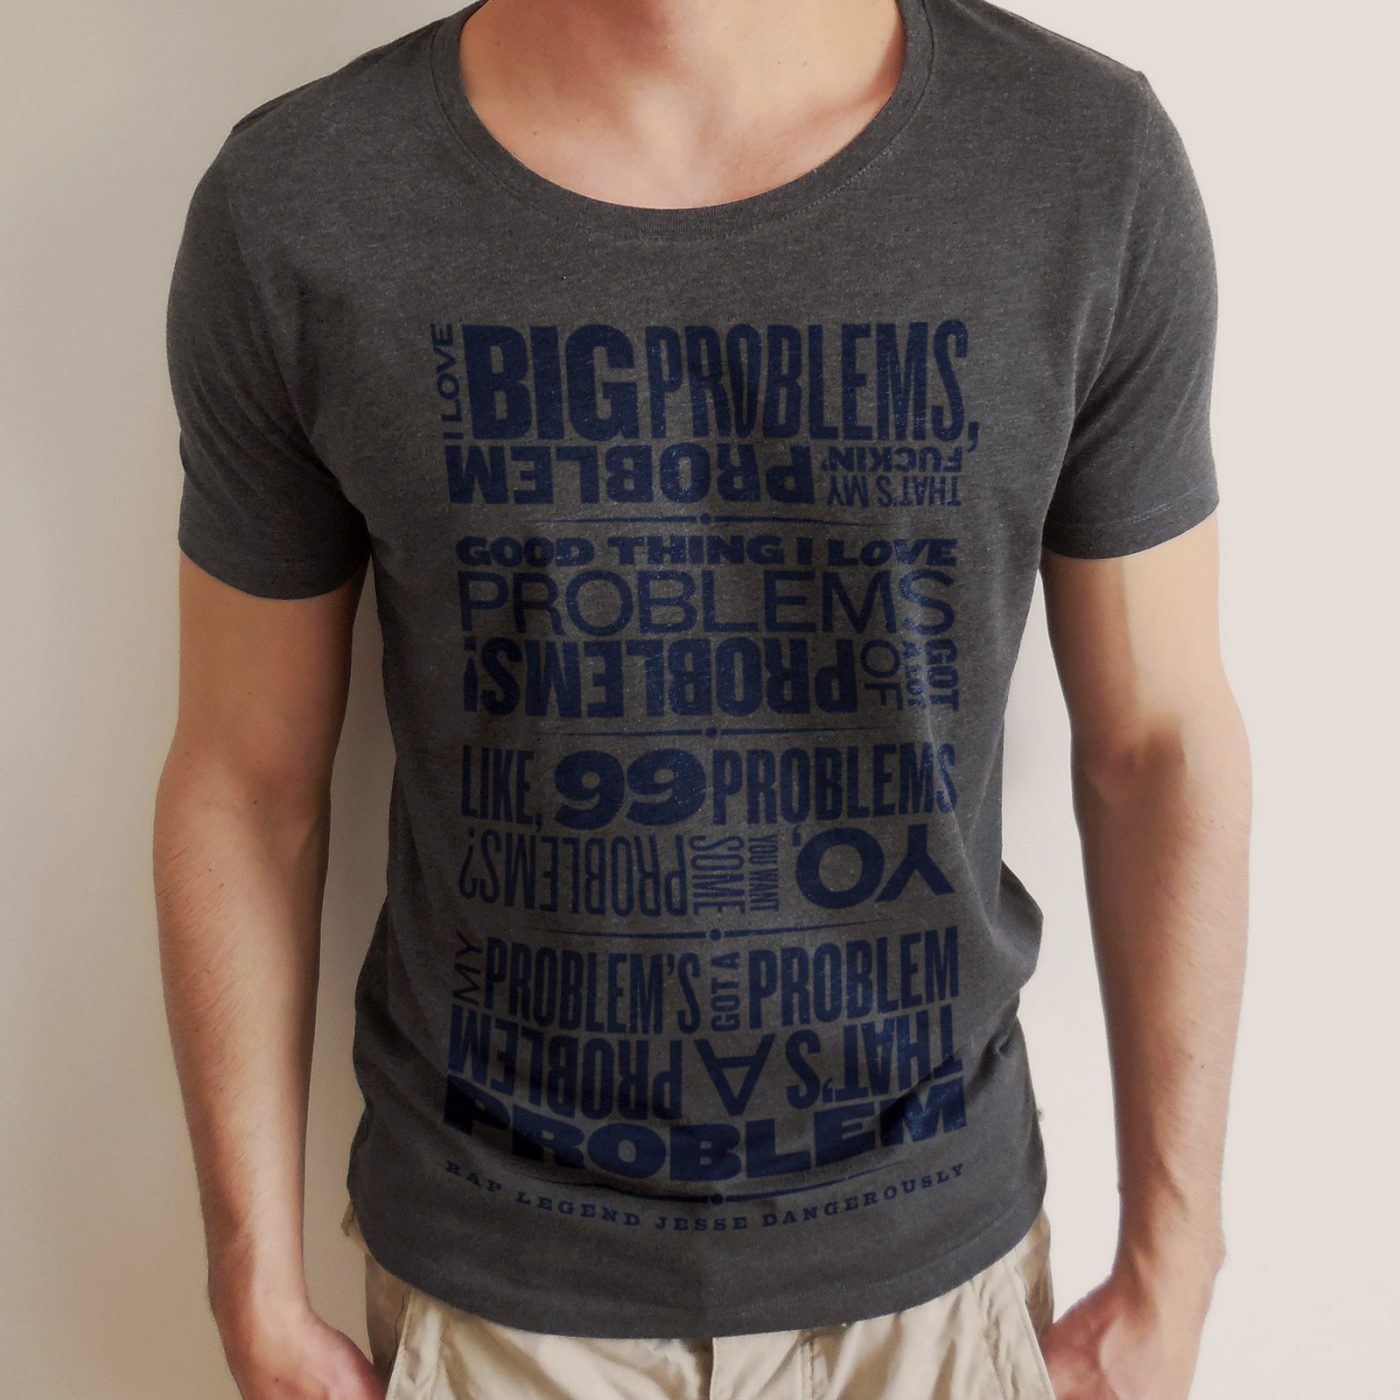 jesse-dangerously-problems-t-shirt-3